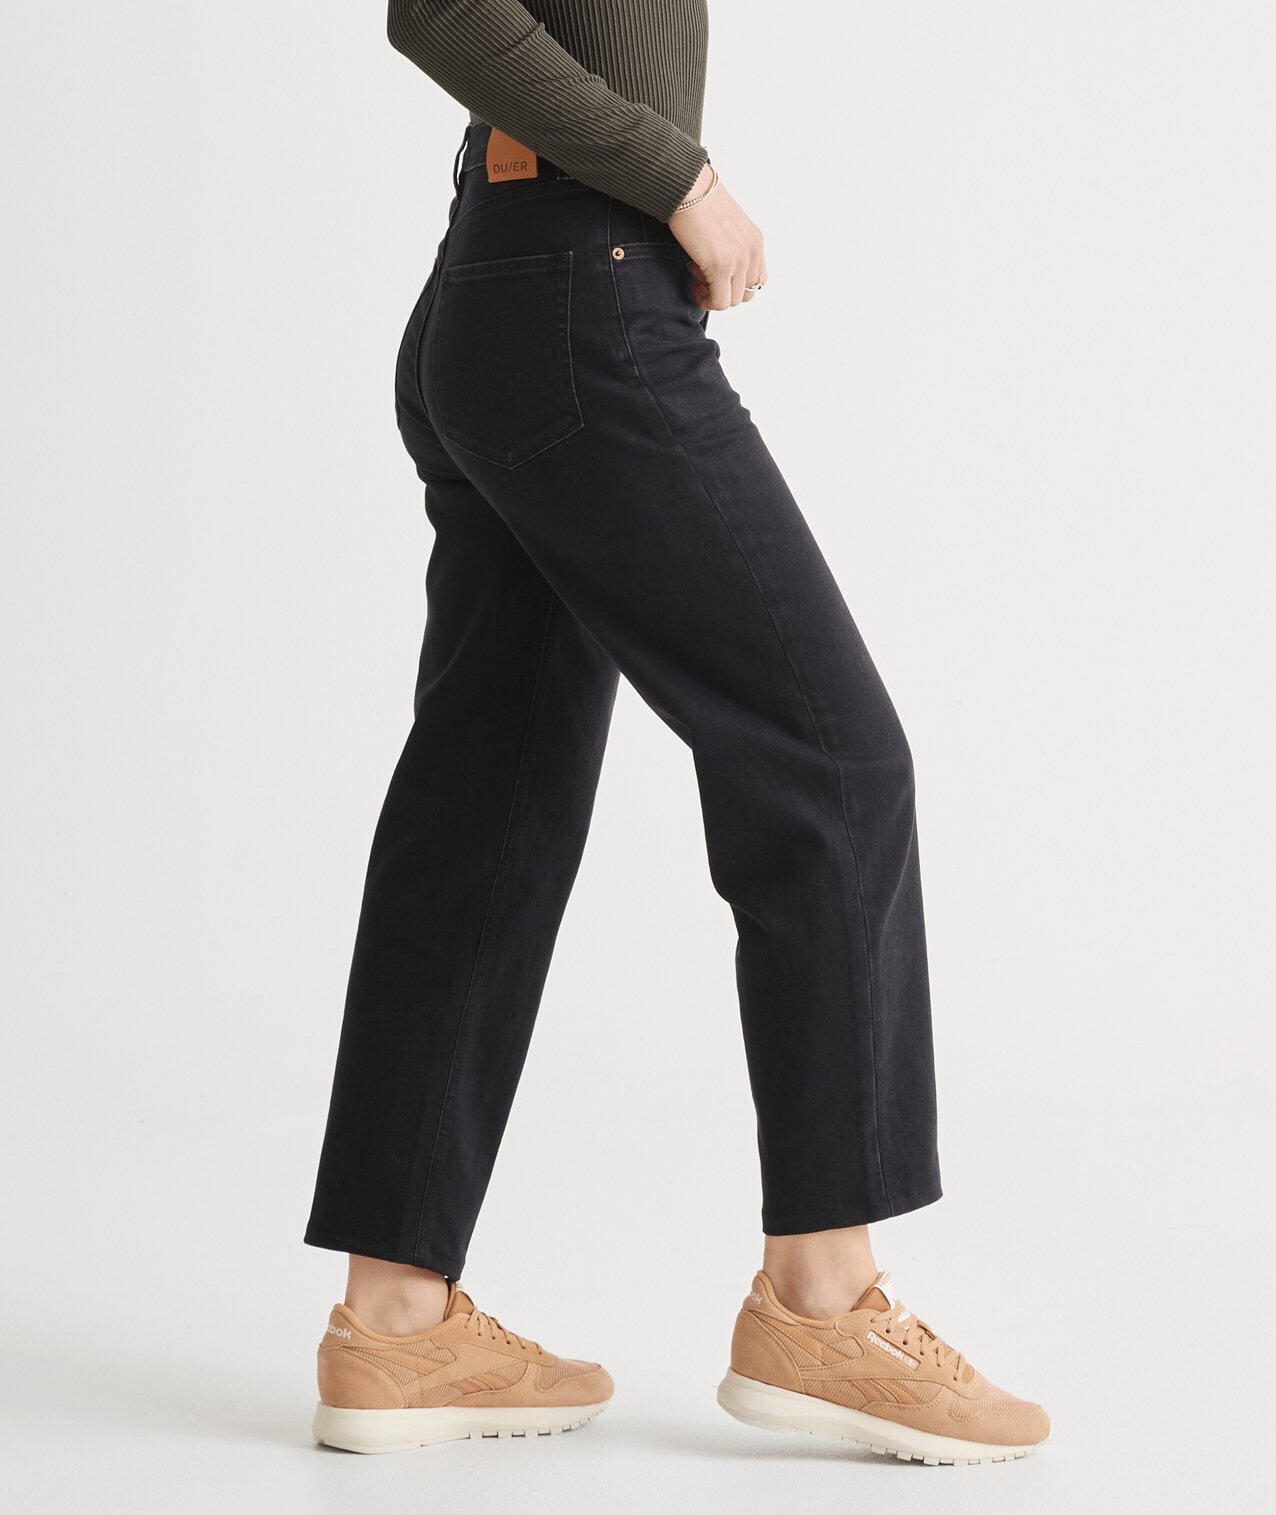 Lee Comfort Waistband Pants Women 10 Short Gray Check Mid Rise Straight Leg